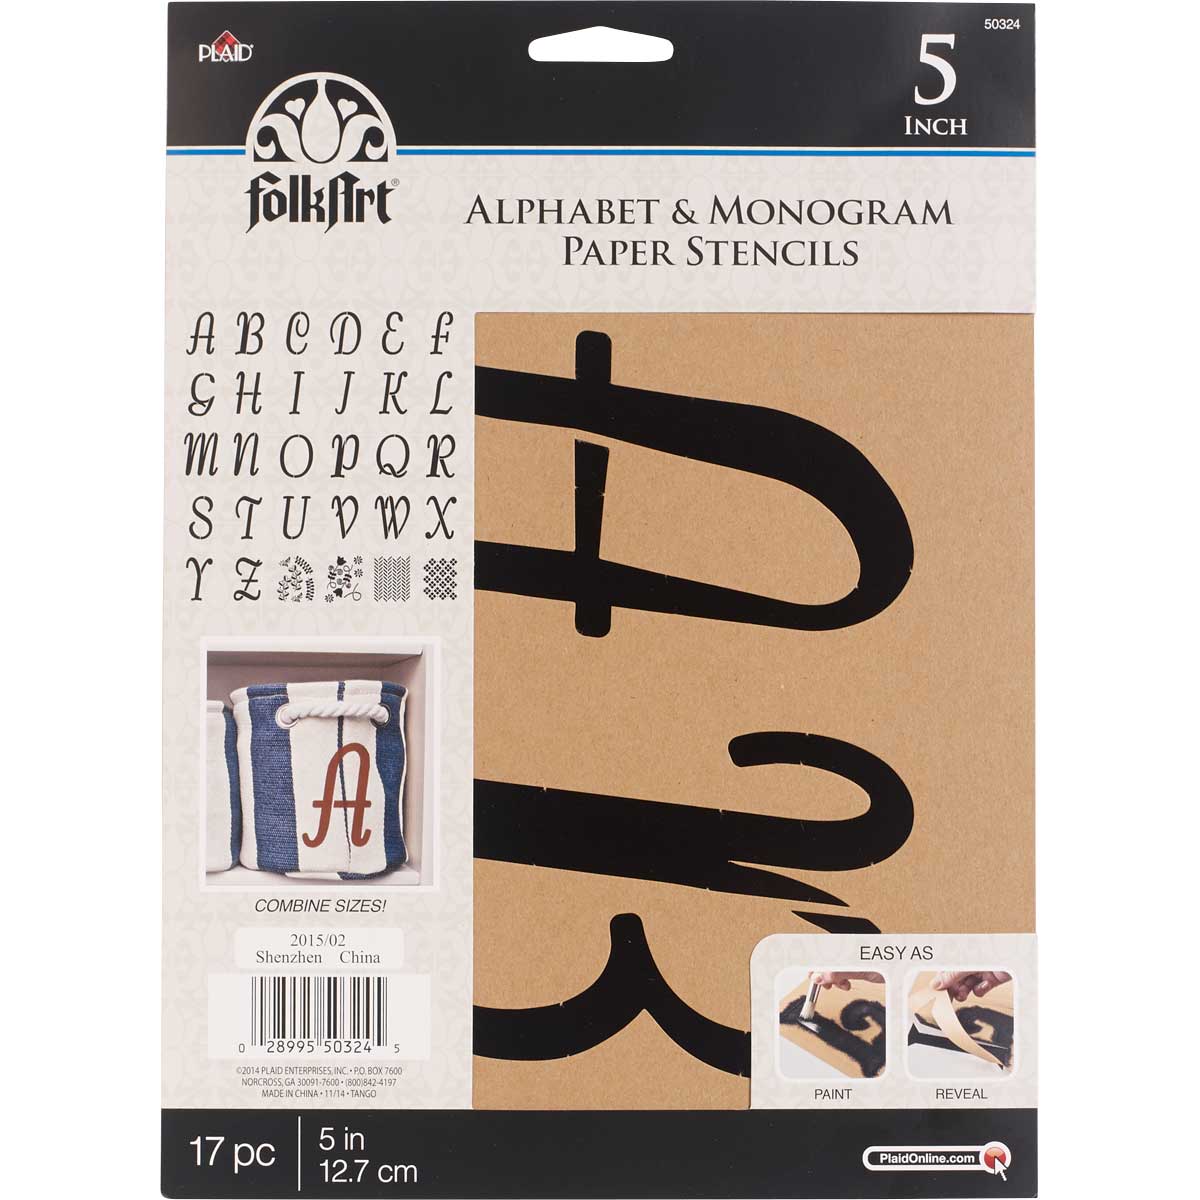 FolkArt ® Alphabet & Monogram Paper Stencils - Italic Font, 5